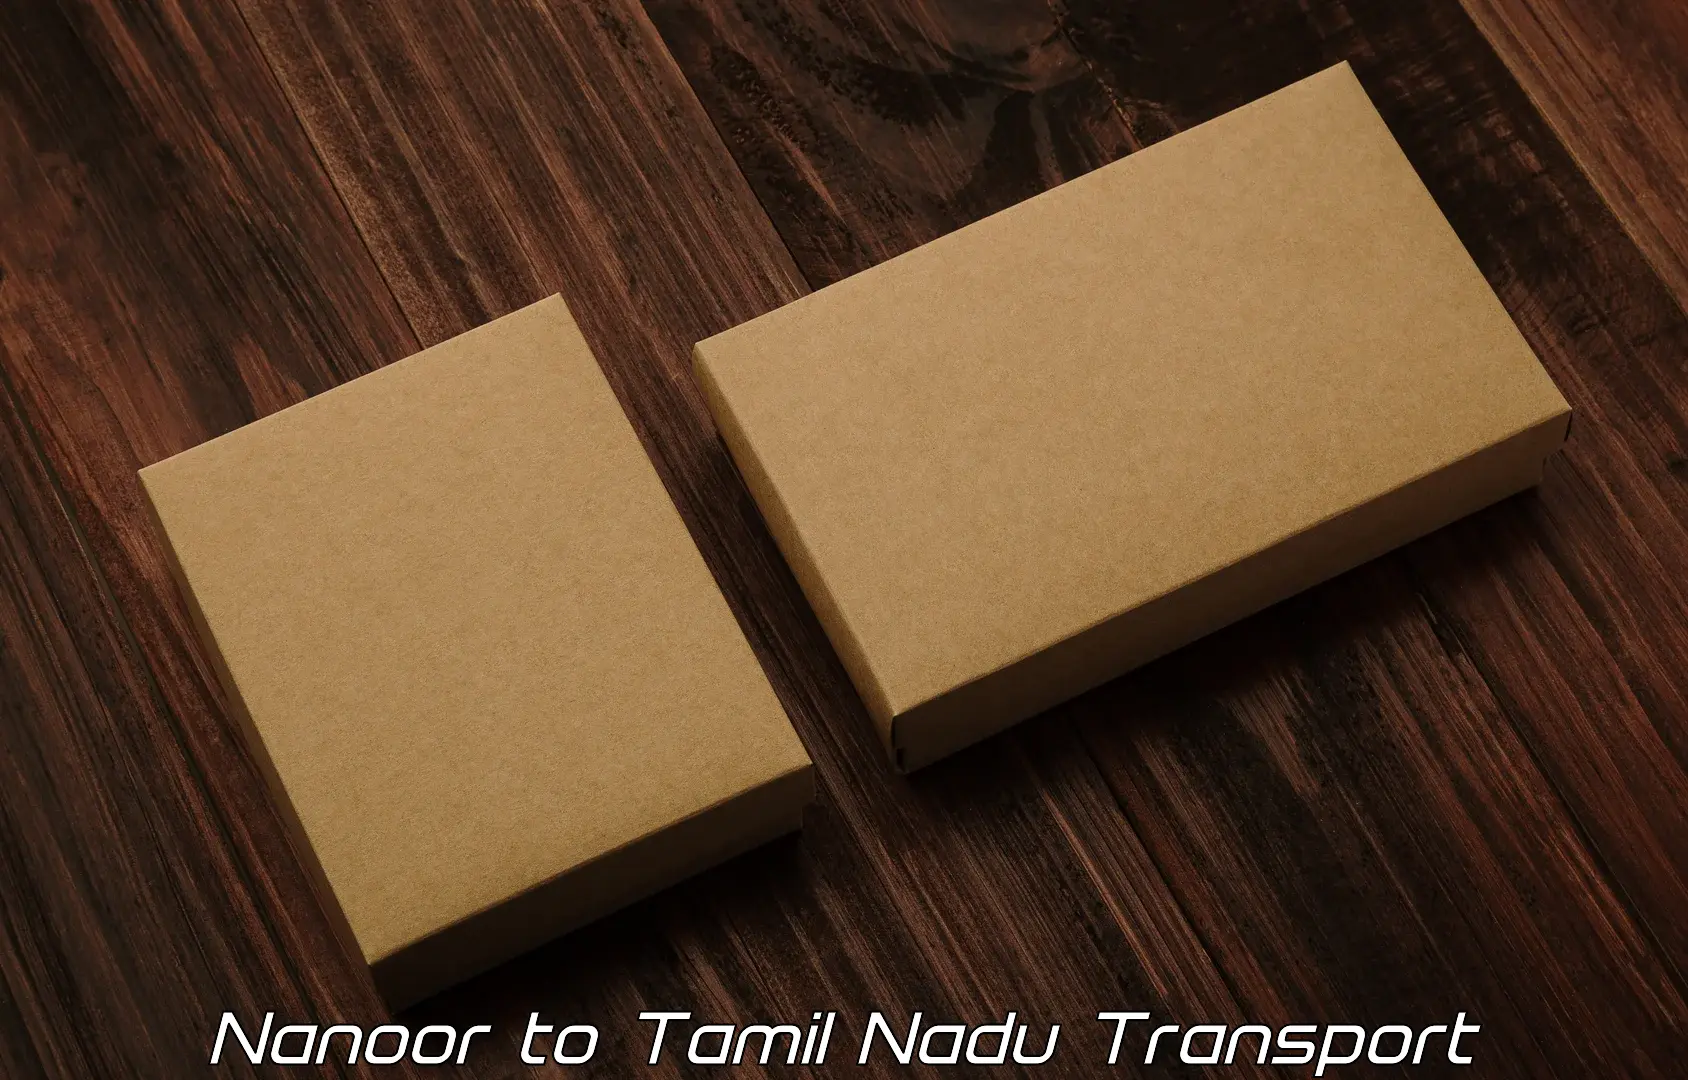 Cargo train transport services Nanoor to Kanchipuram